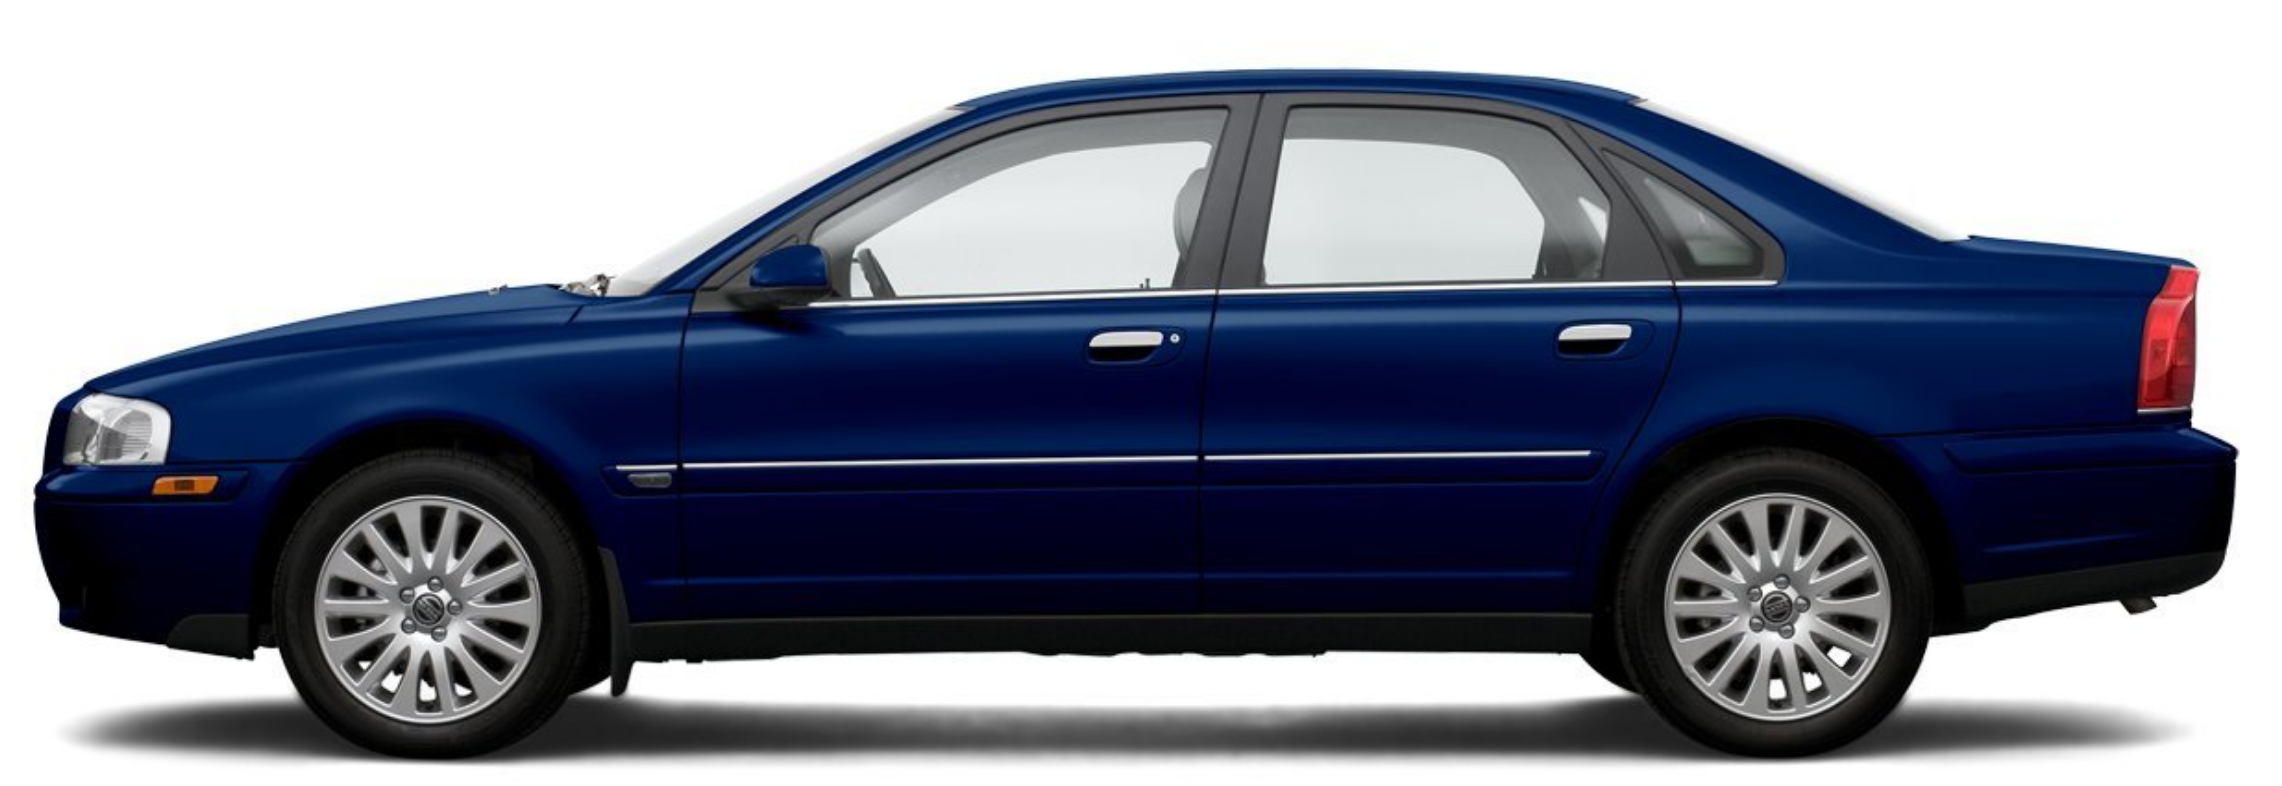 Afbeelding van 13NDVS, blauwe Volvo S80 2.4 170 Pk Aut. sedan